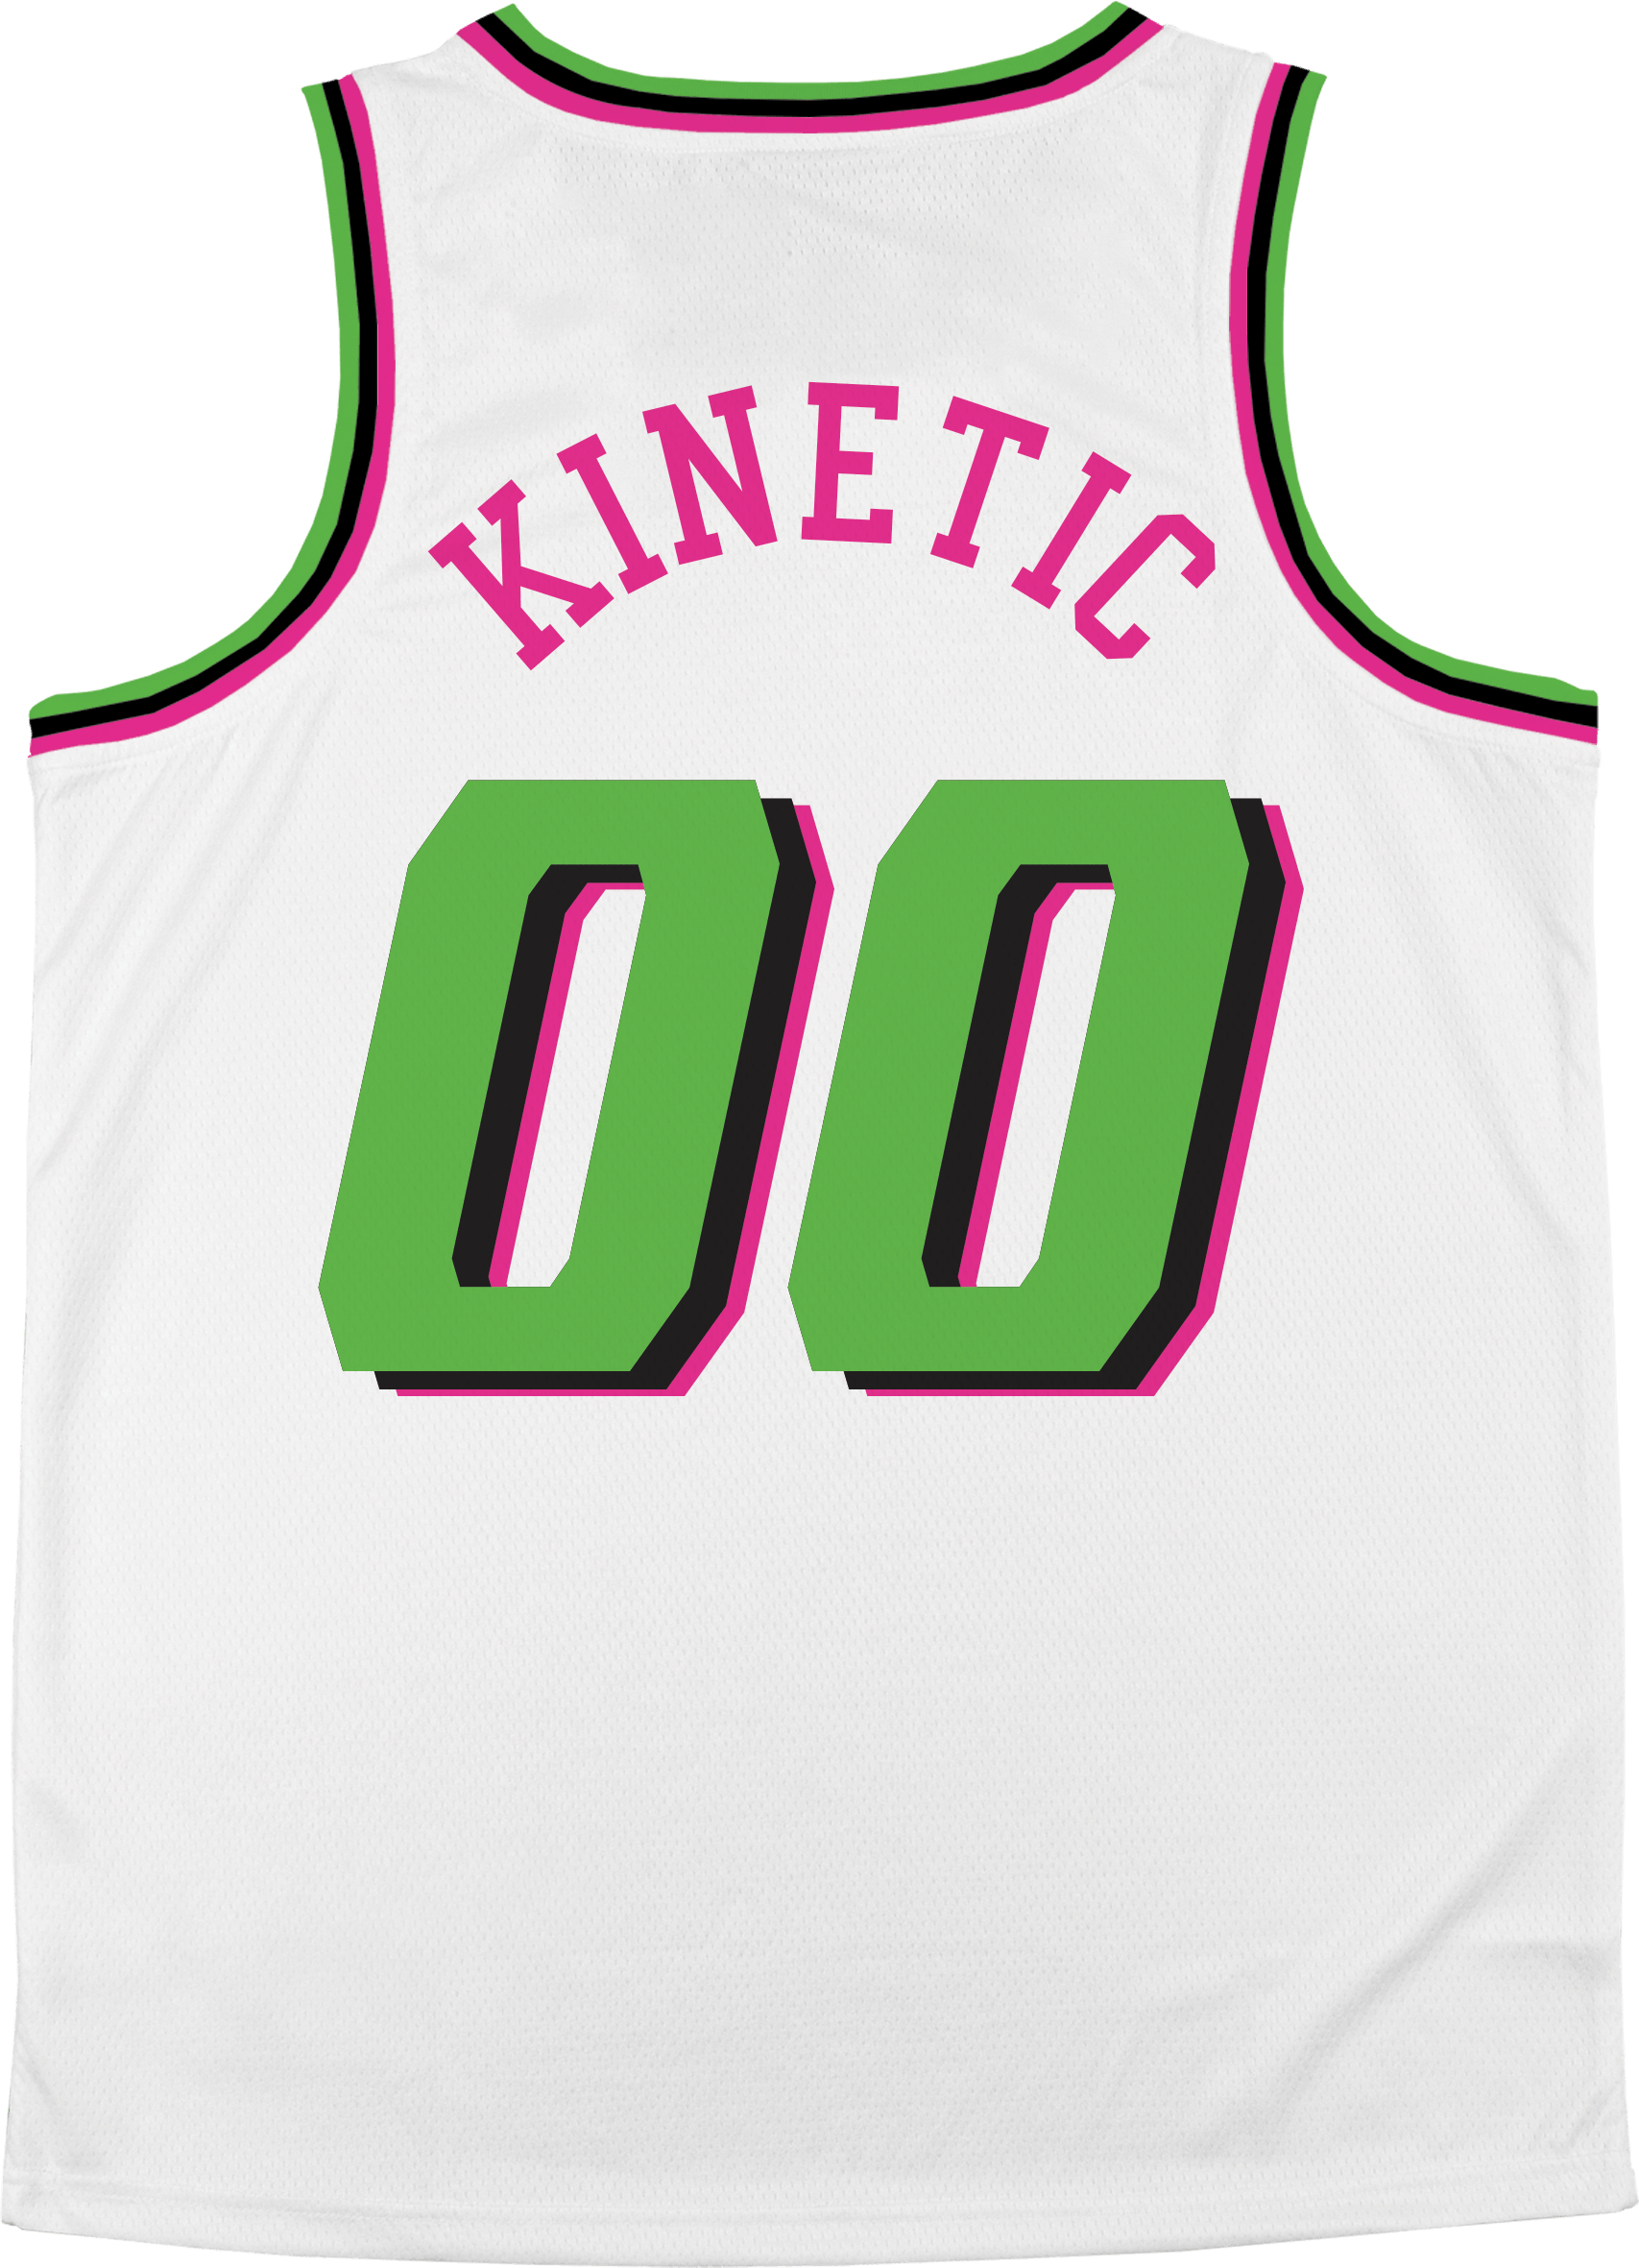 Phi Delta Theta - Bubble Gum Basketball Jersey - Kinetic Society